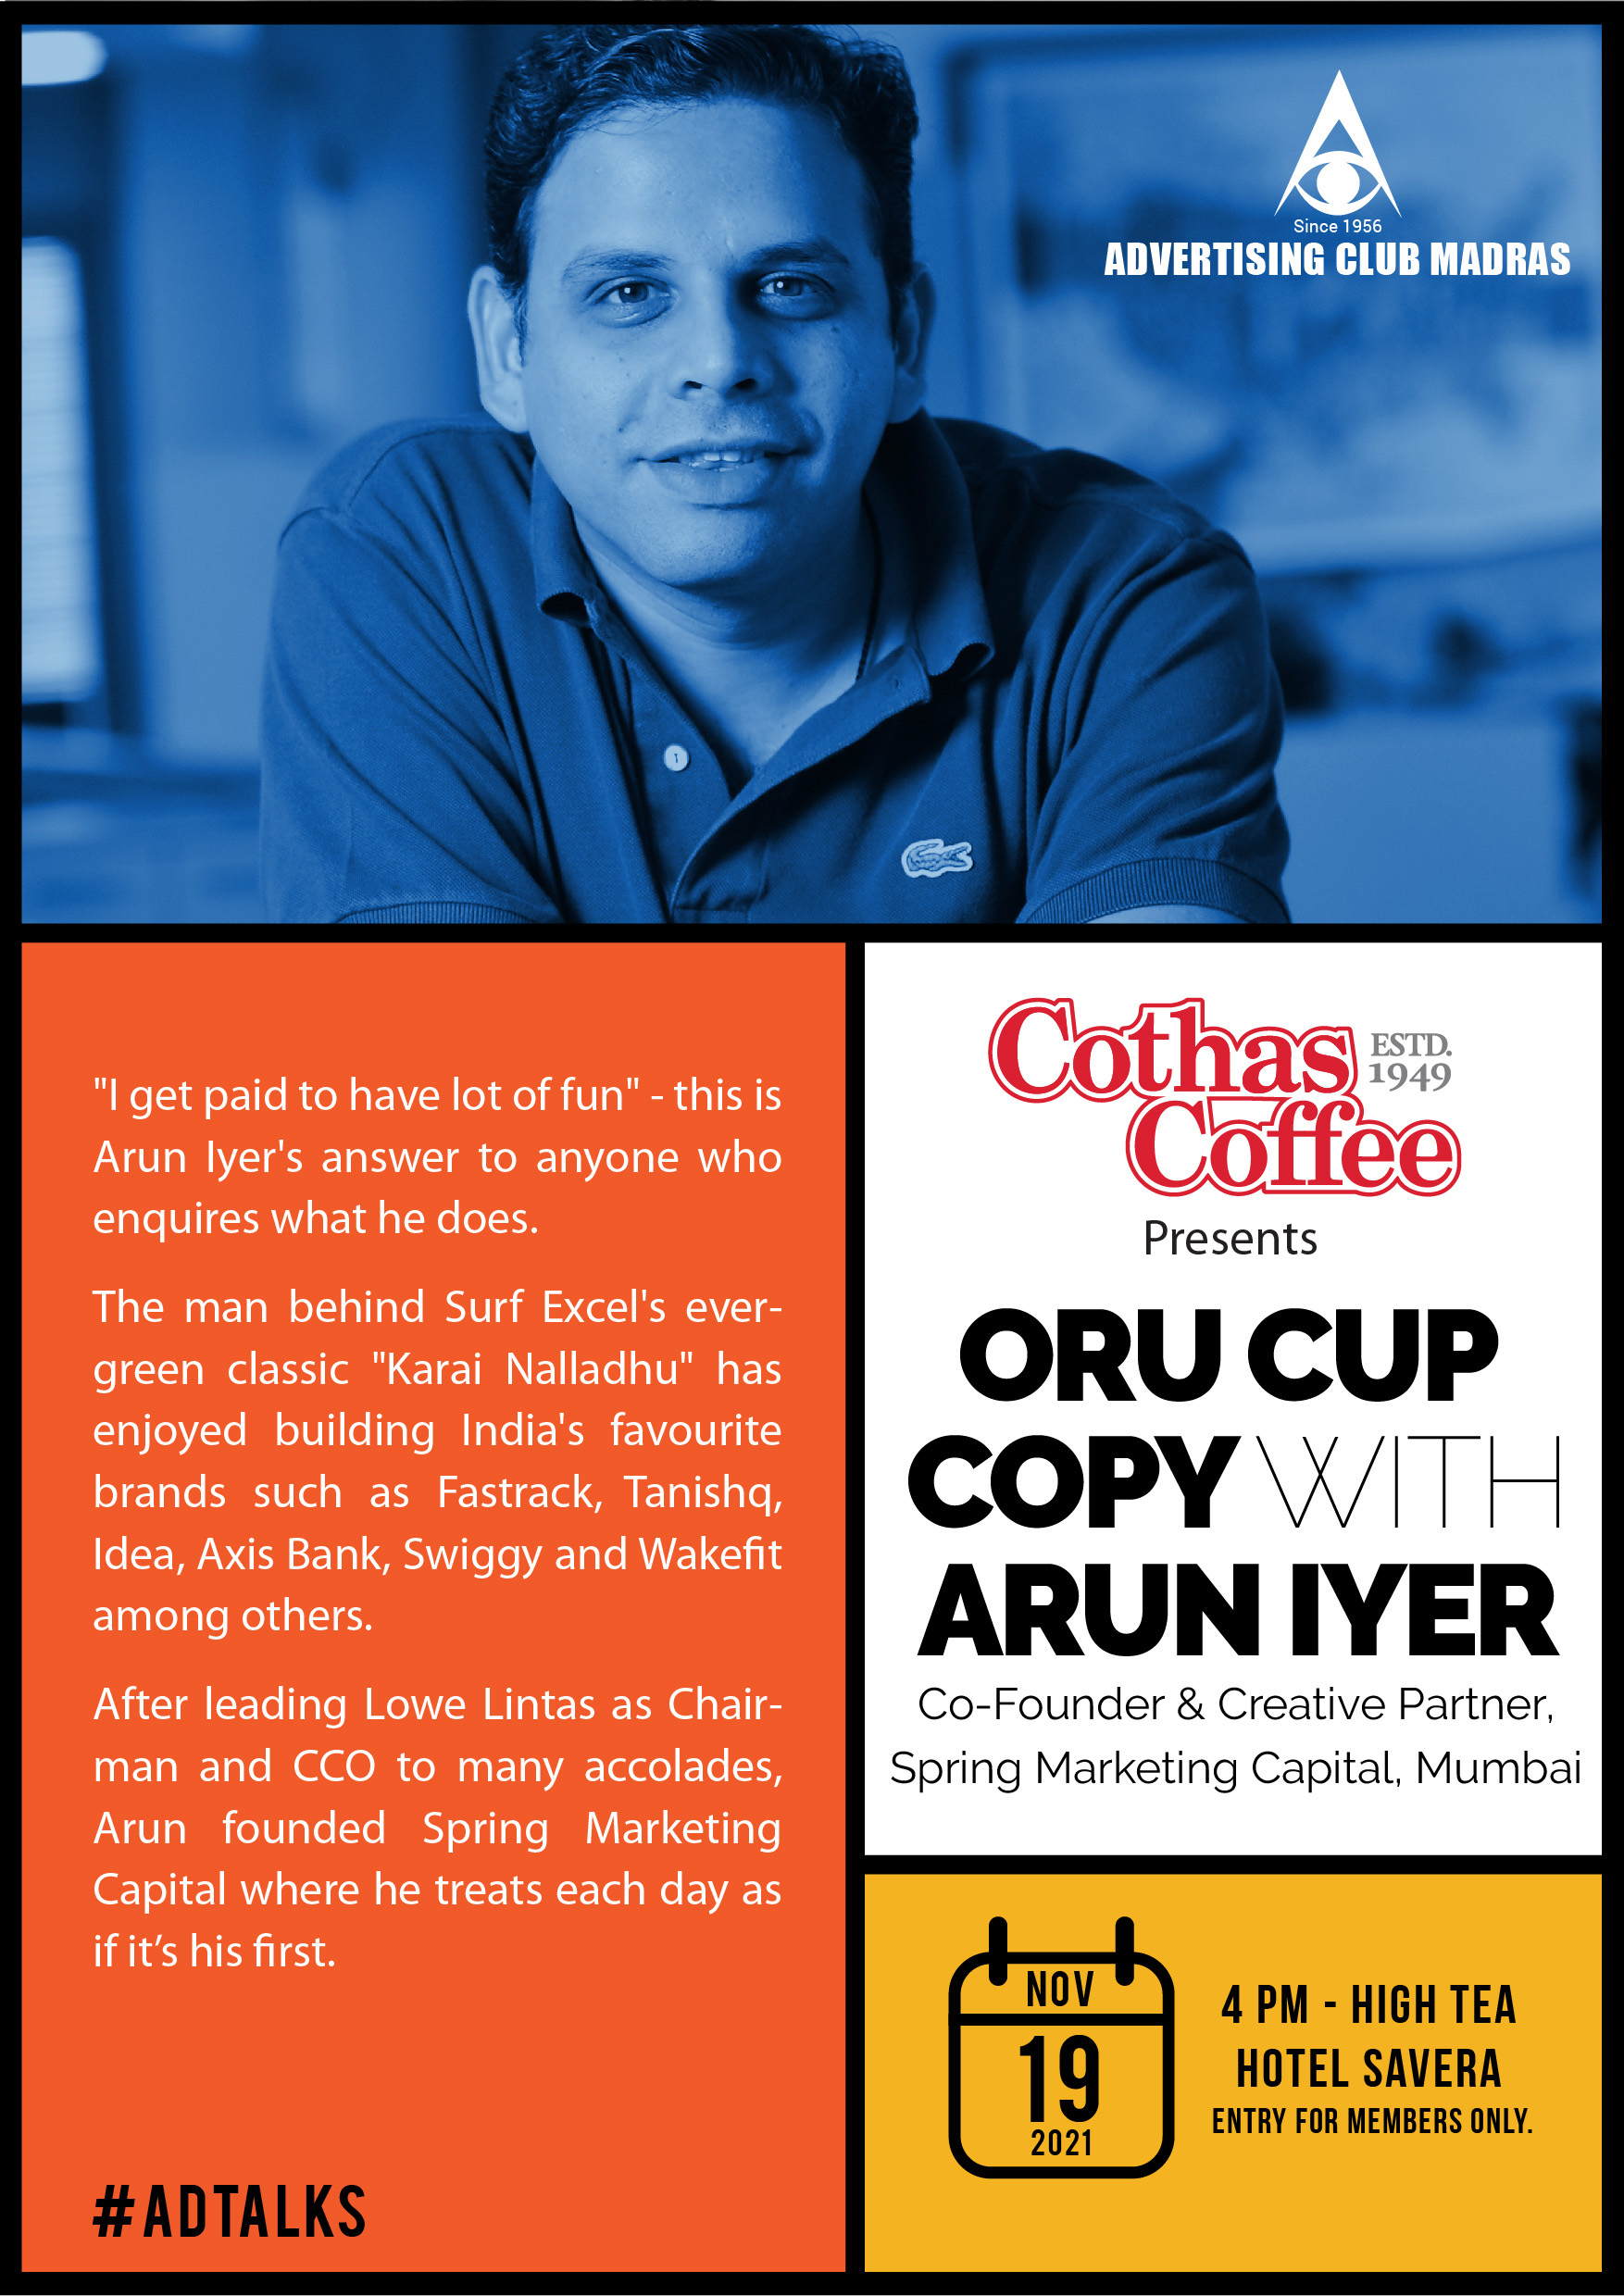 #ADTALKS - Oru Cup Copy With Arun Iyer